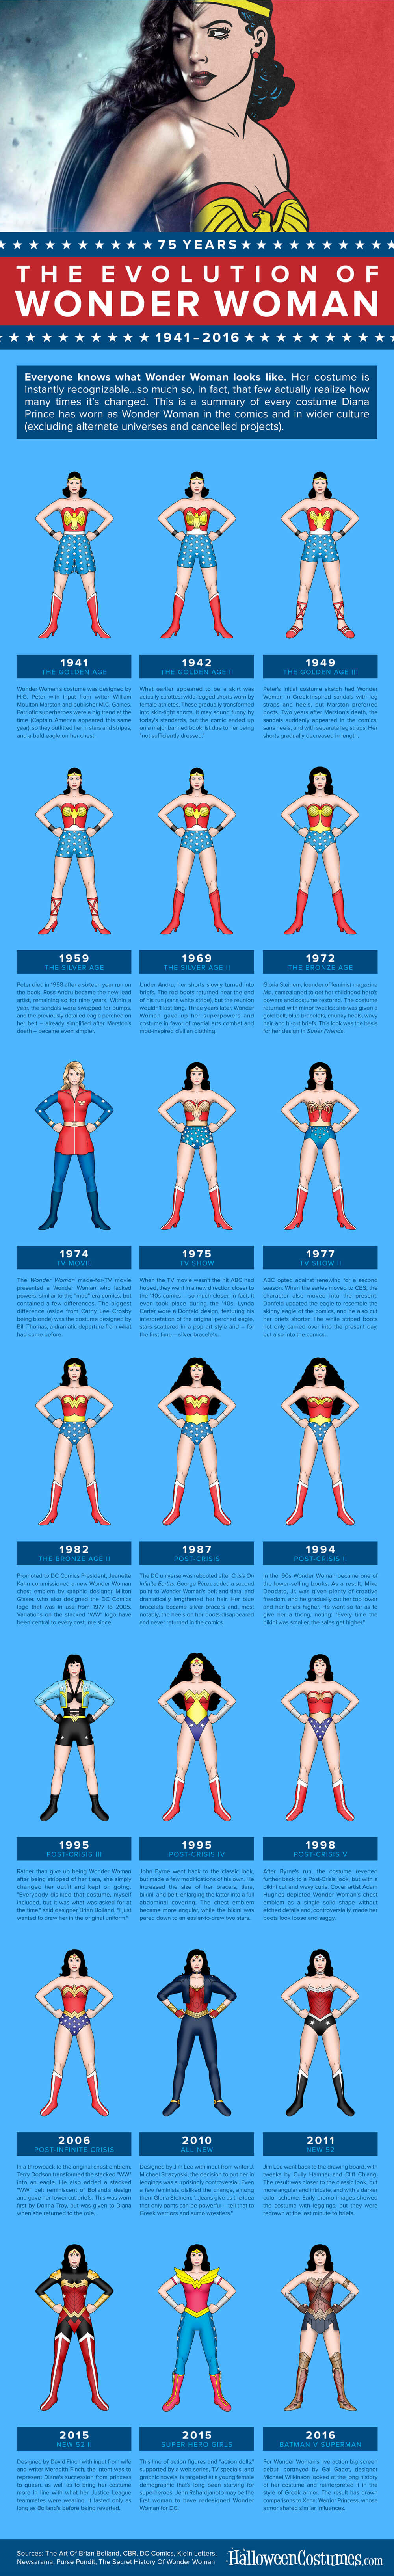 http://images.halloweencostumes.com/blog/928/Wonder-Woman-Infographic.jpg